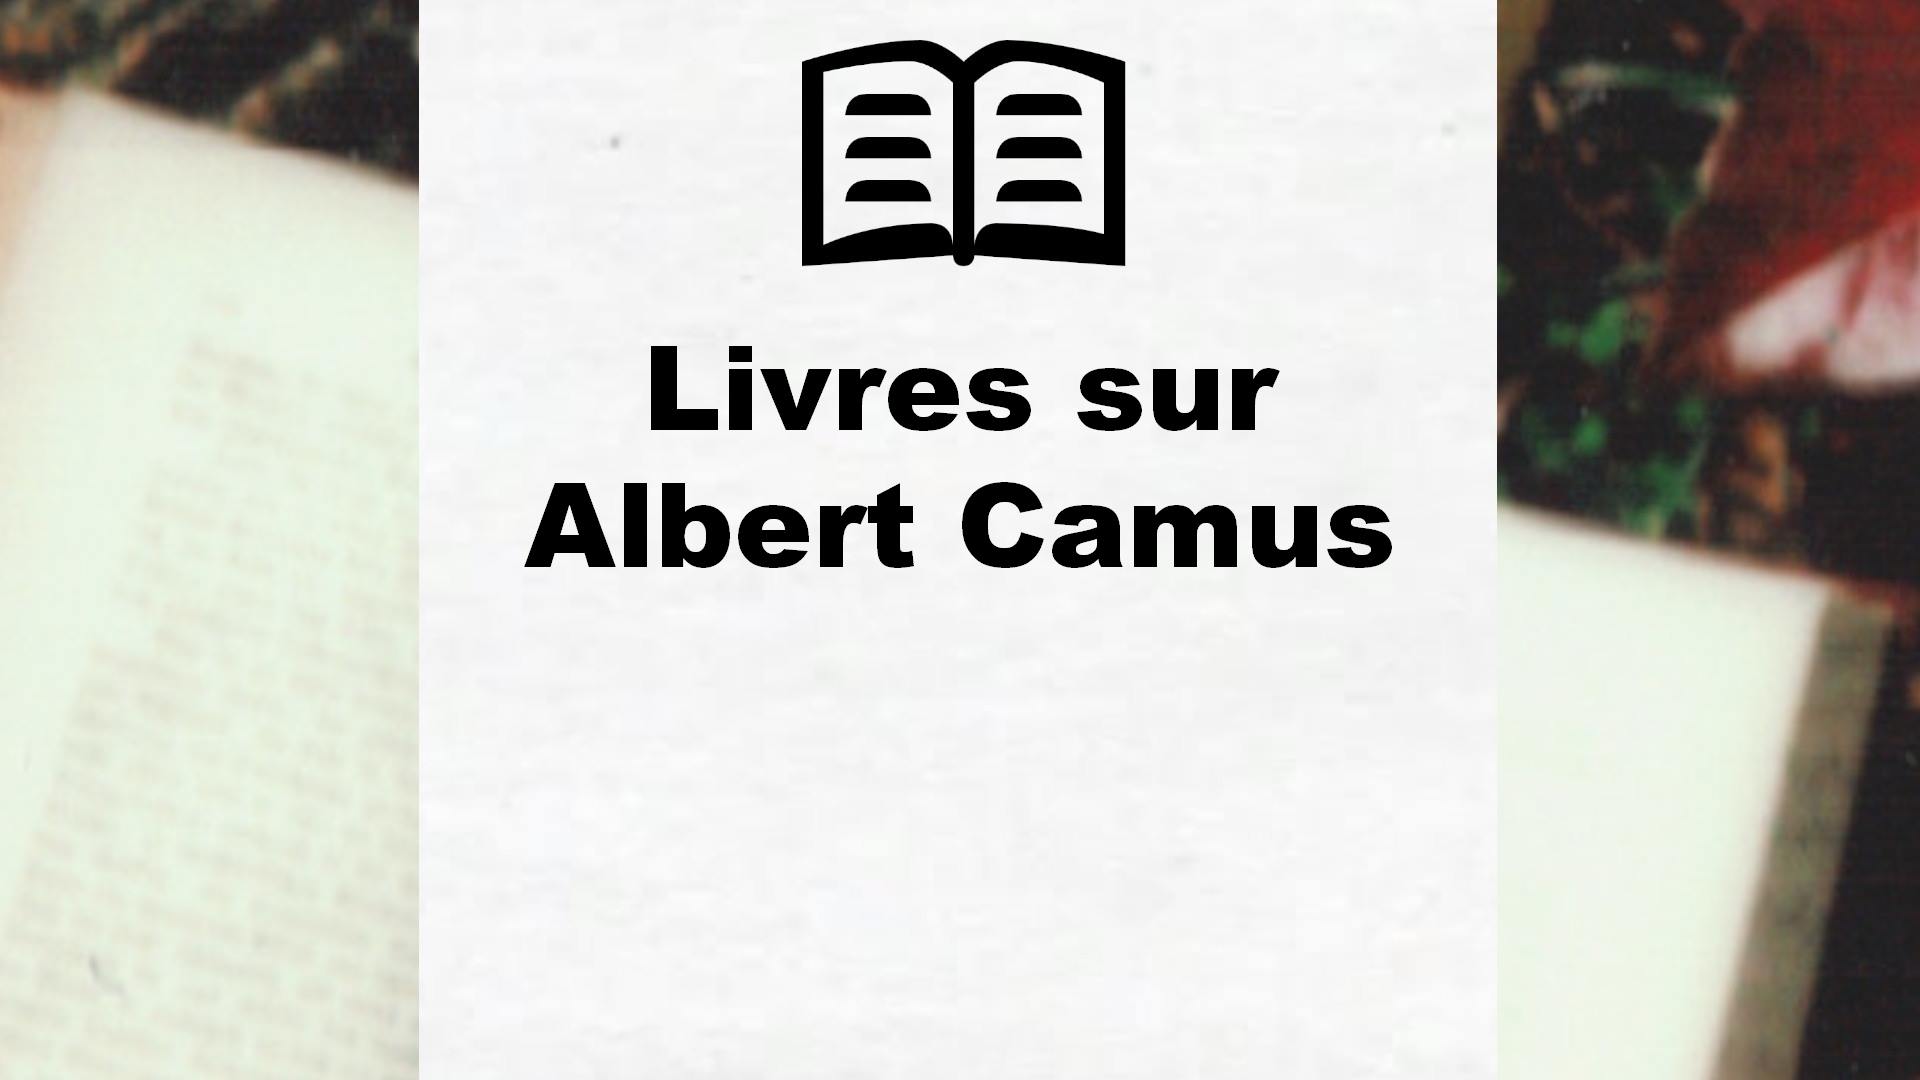 Livres sur Albert Camus